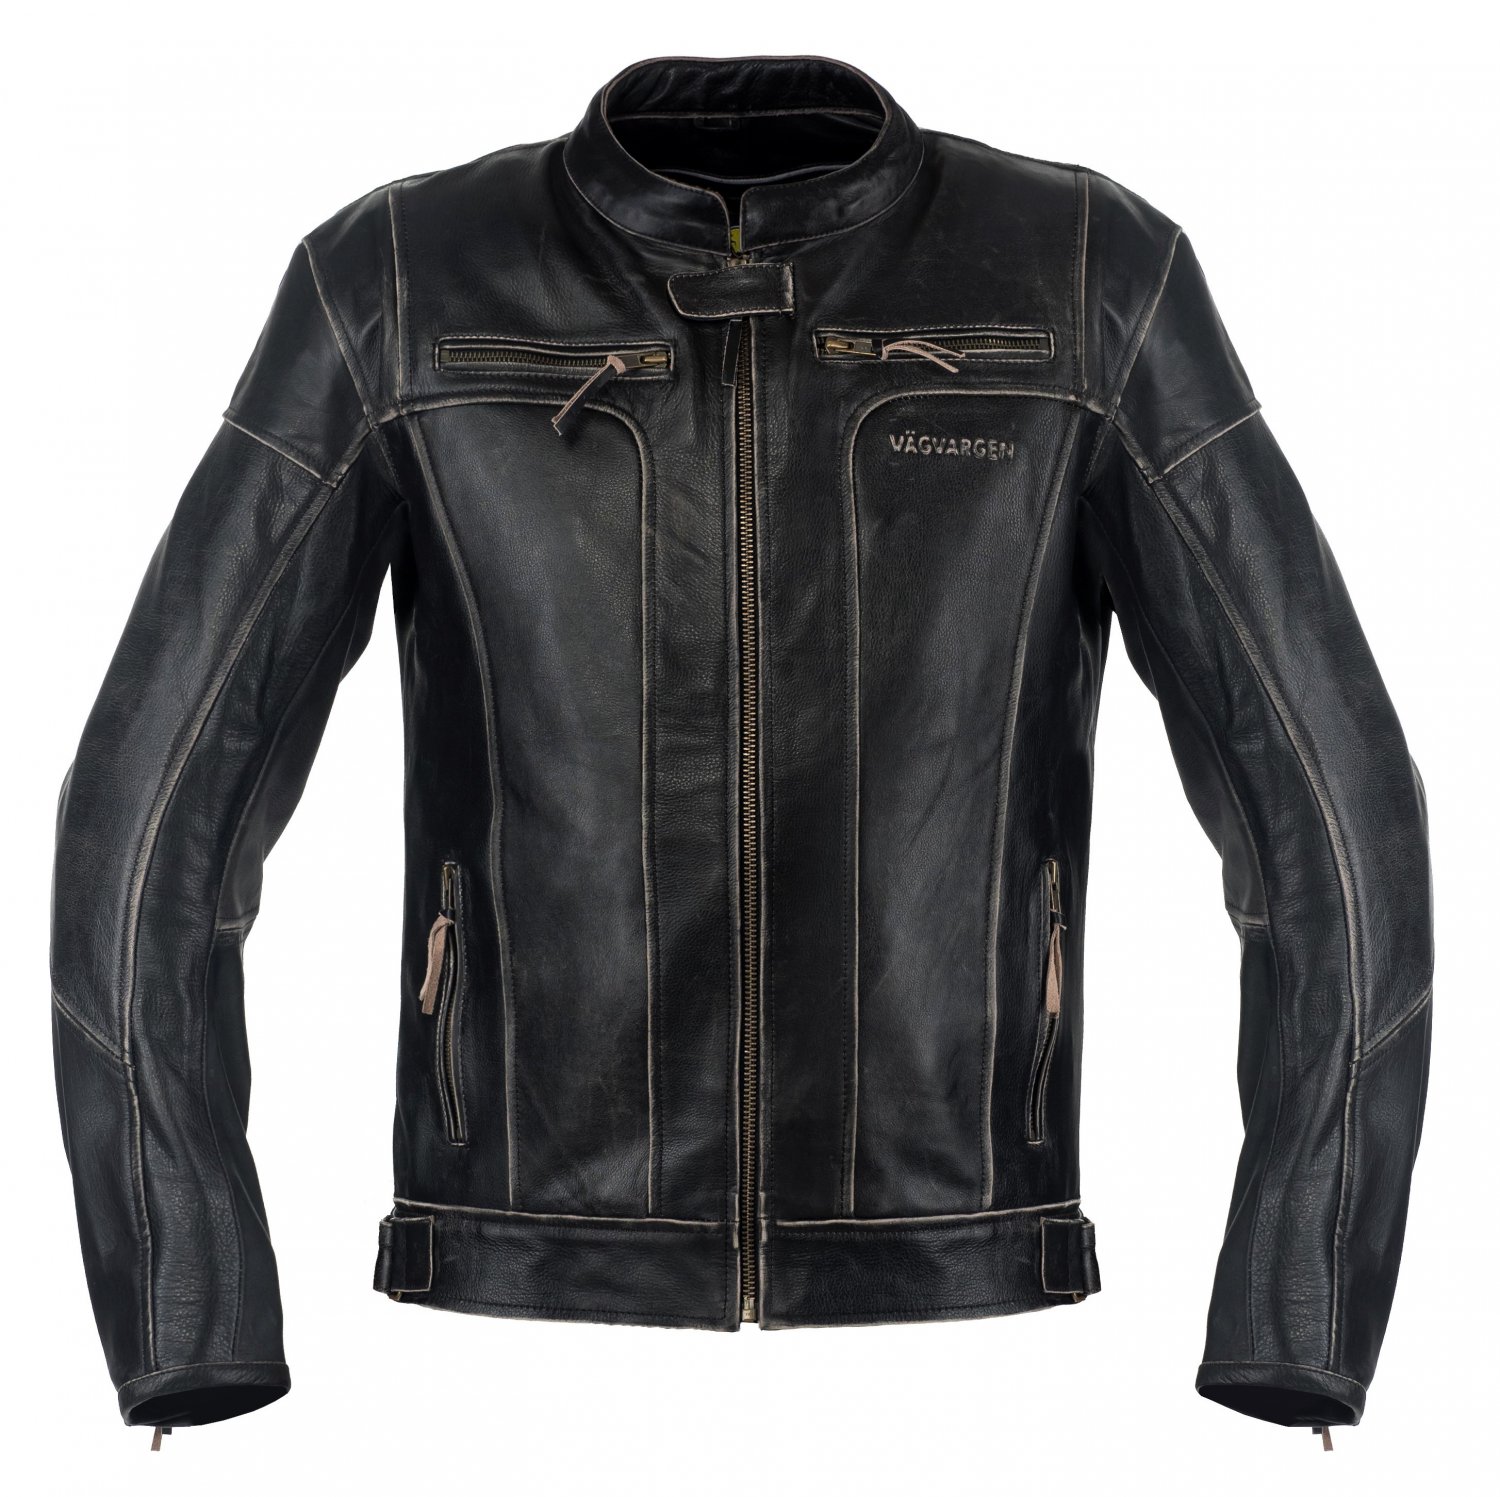 Adventure Retro Motorcycle Leather Jacket